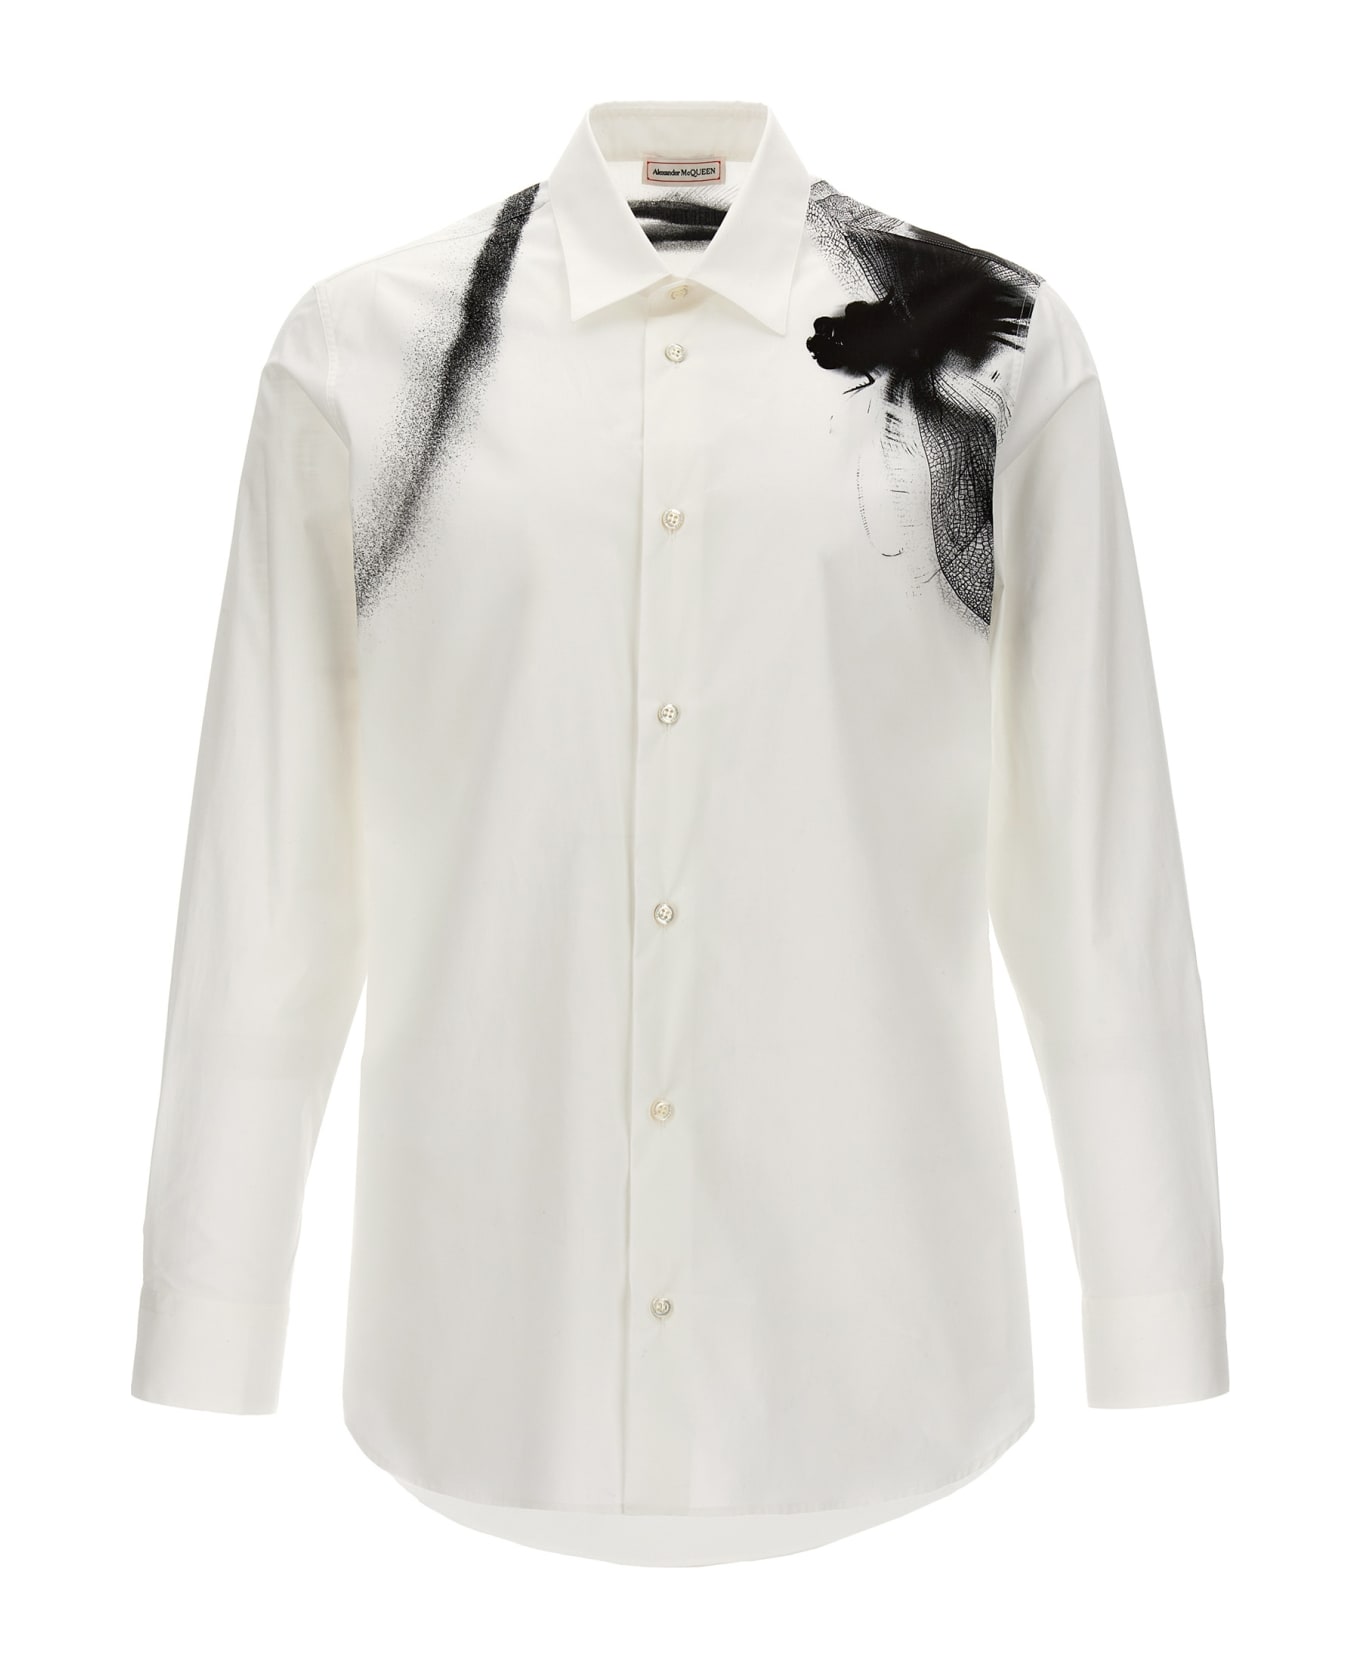 Alexander McQueen Printed Shirt - White Black シャツ